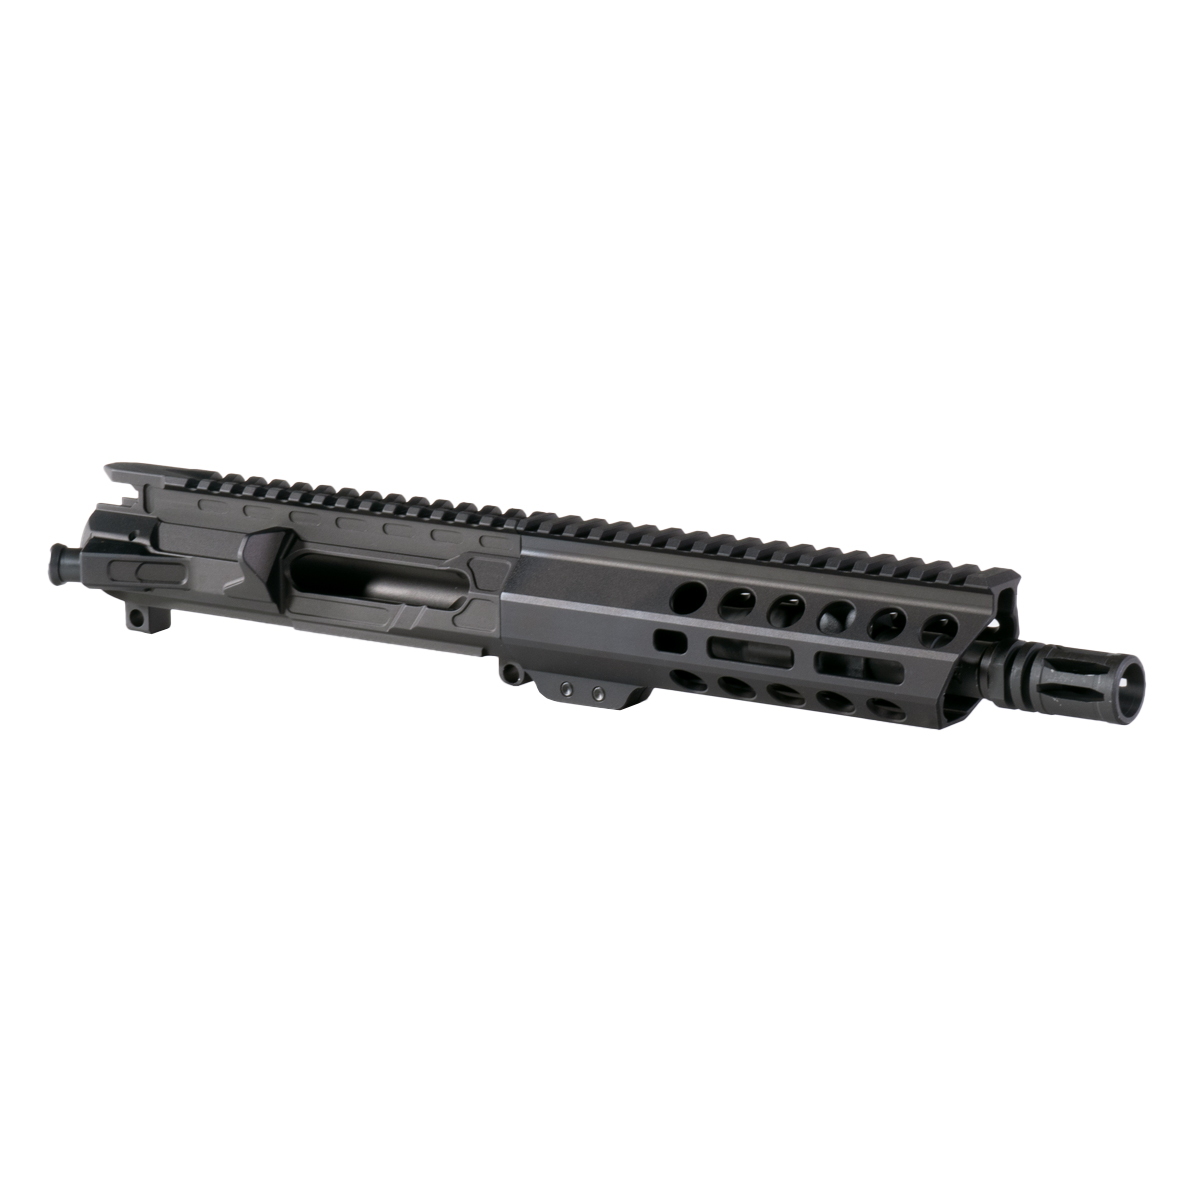 MMC 'Chimera's Breath' 7.5-inch AR-15 5.56 NATO Manganese Phosphate Pistol Upper Build Kit